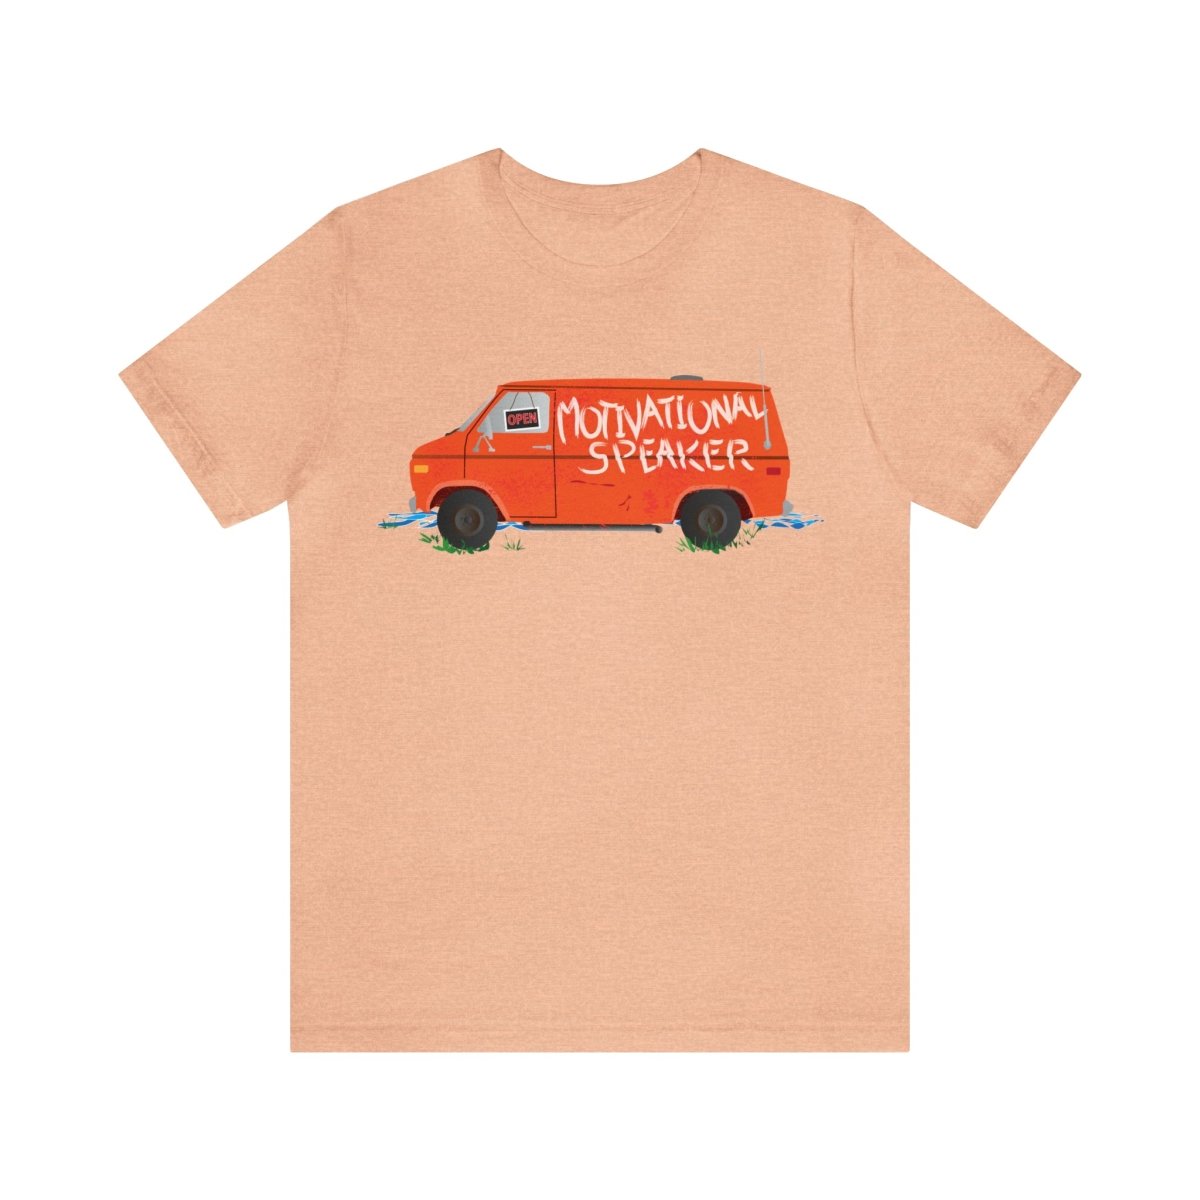 Motivational Speaker Van Premium T-Shirt, Down By The River, Matt Foley, Funny